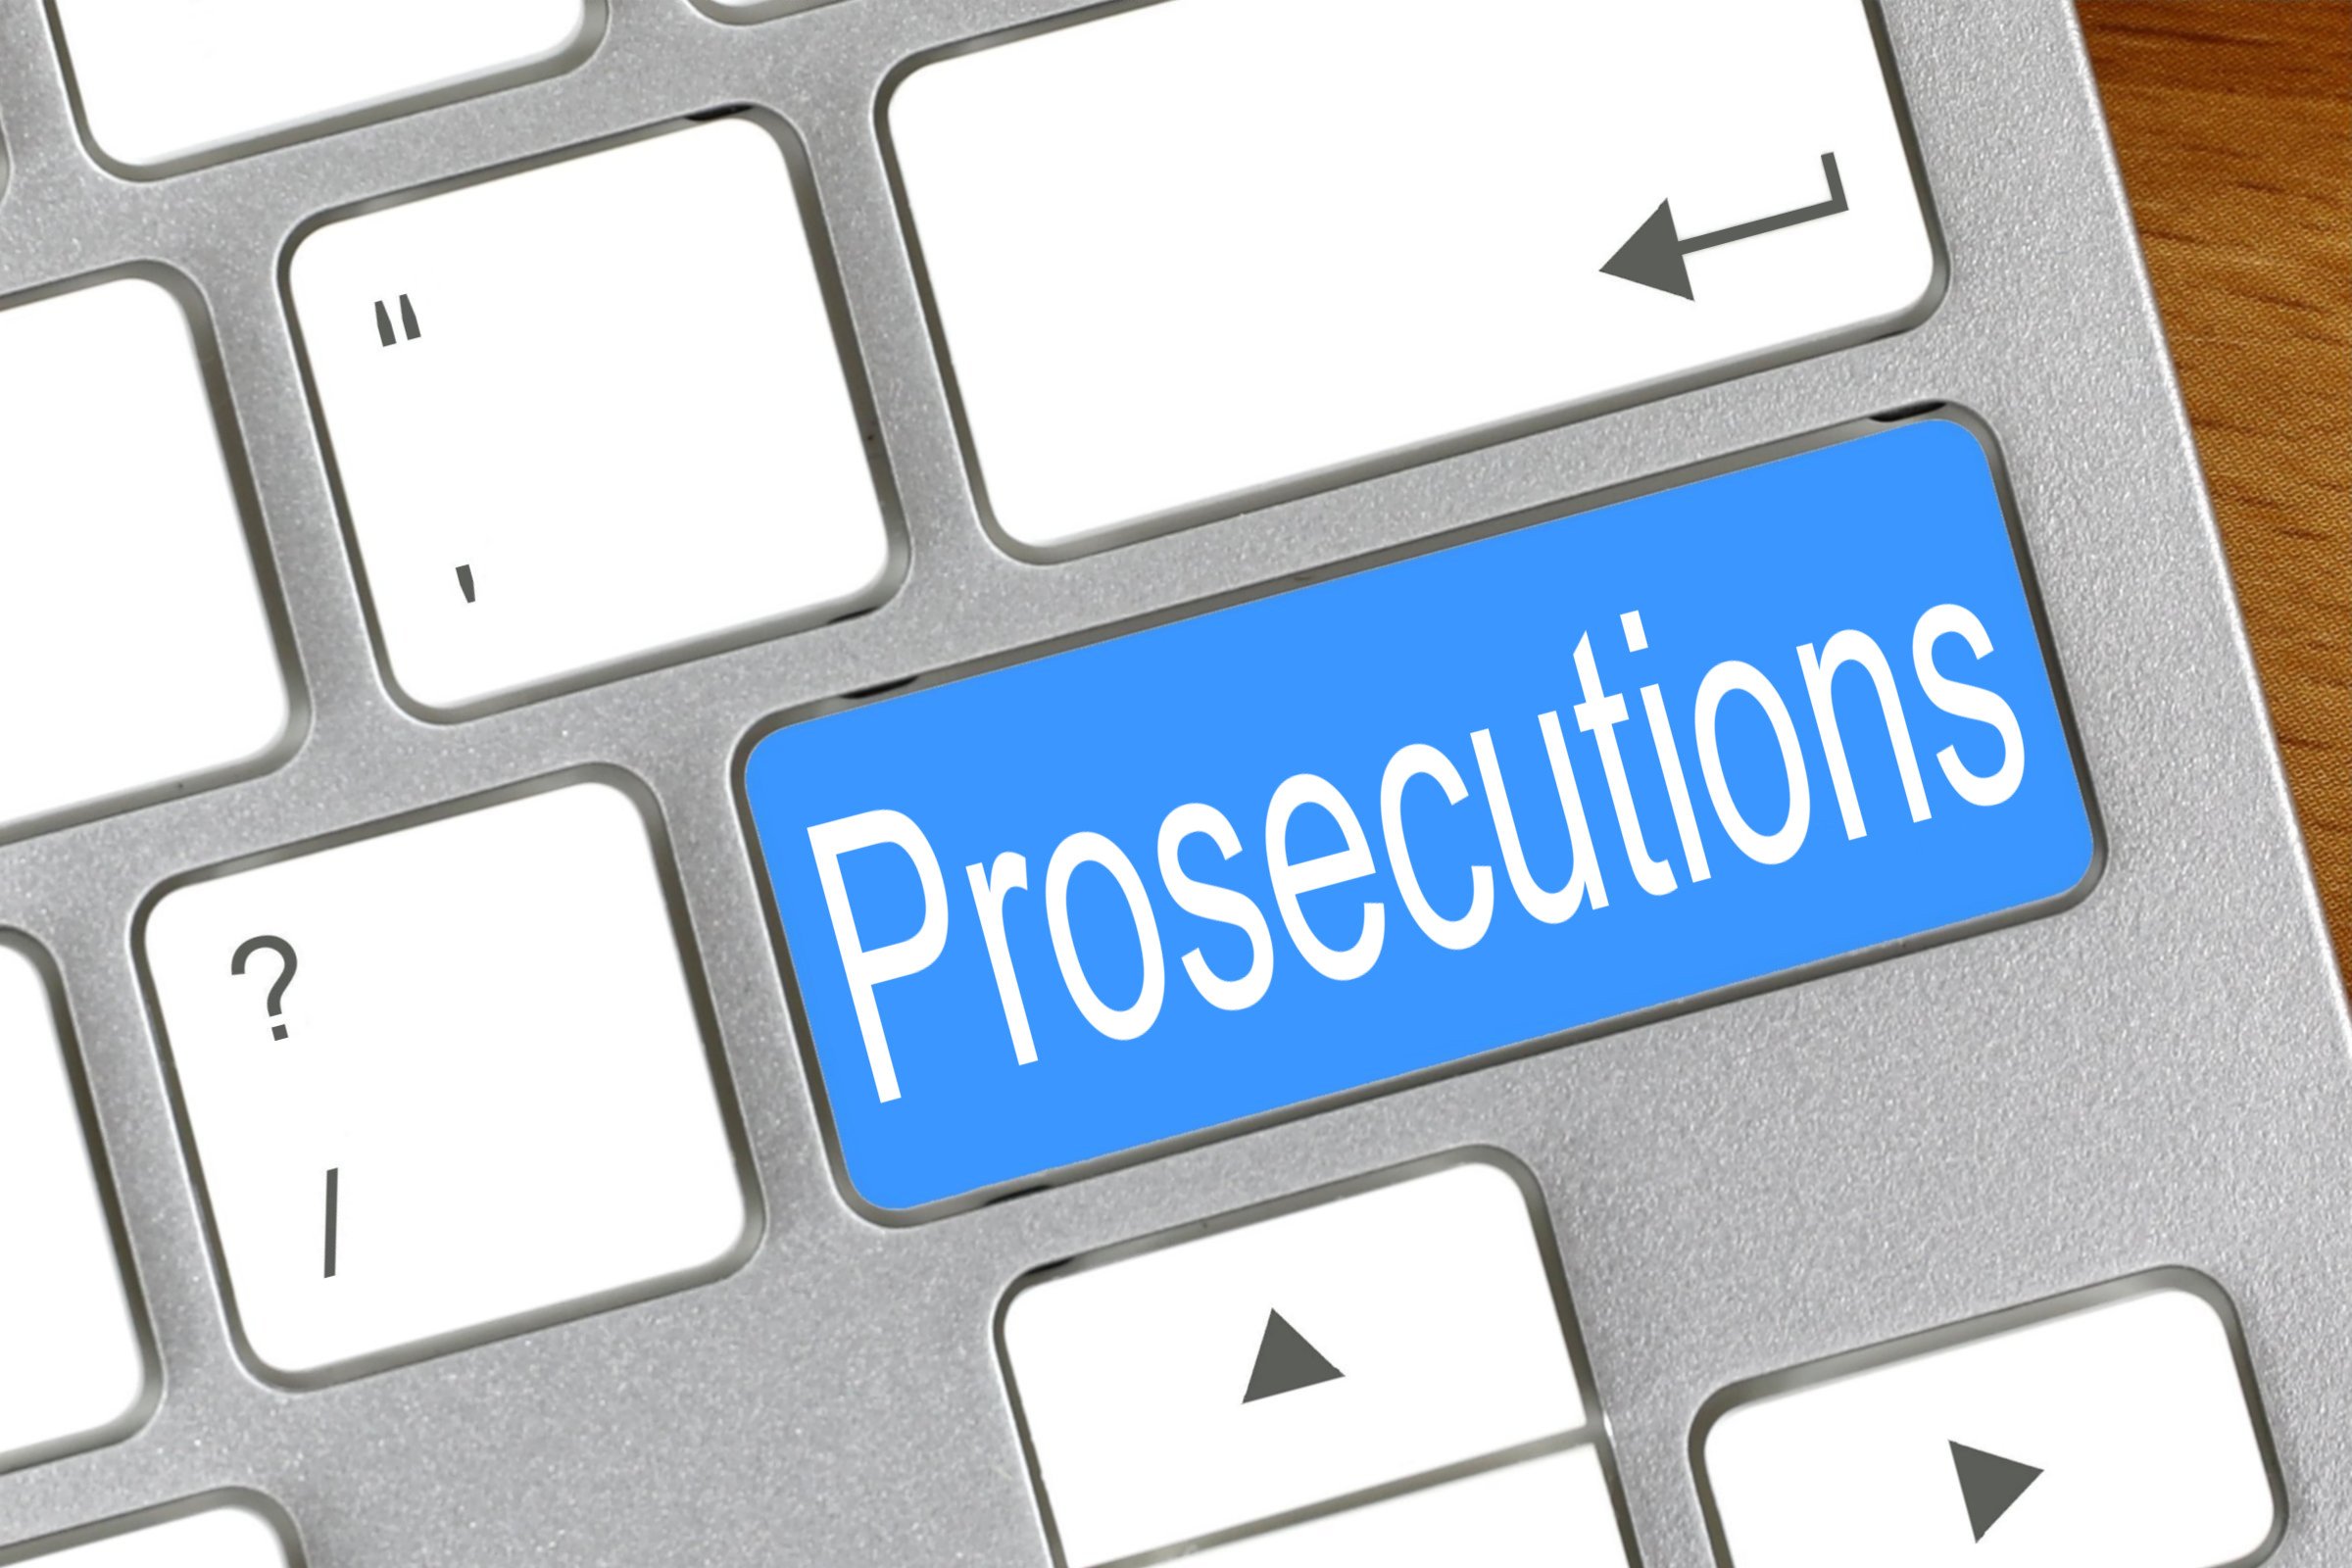 prosecutions